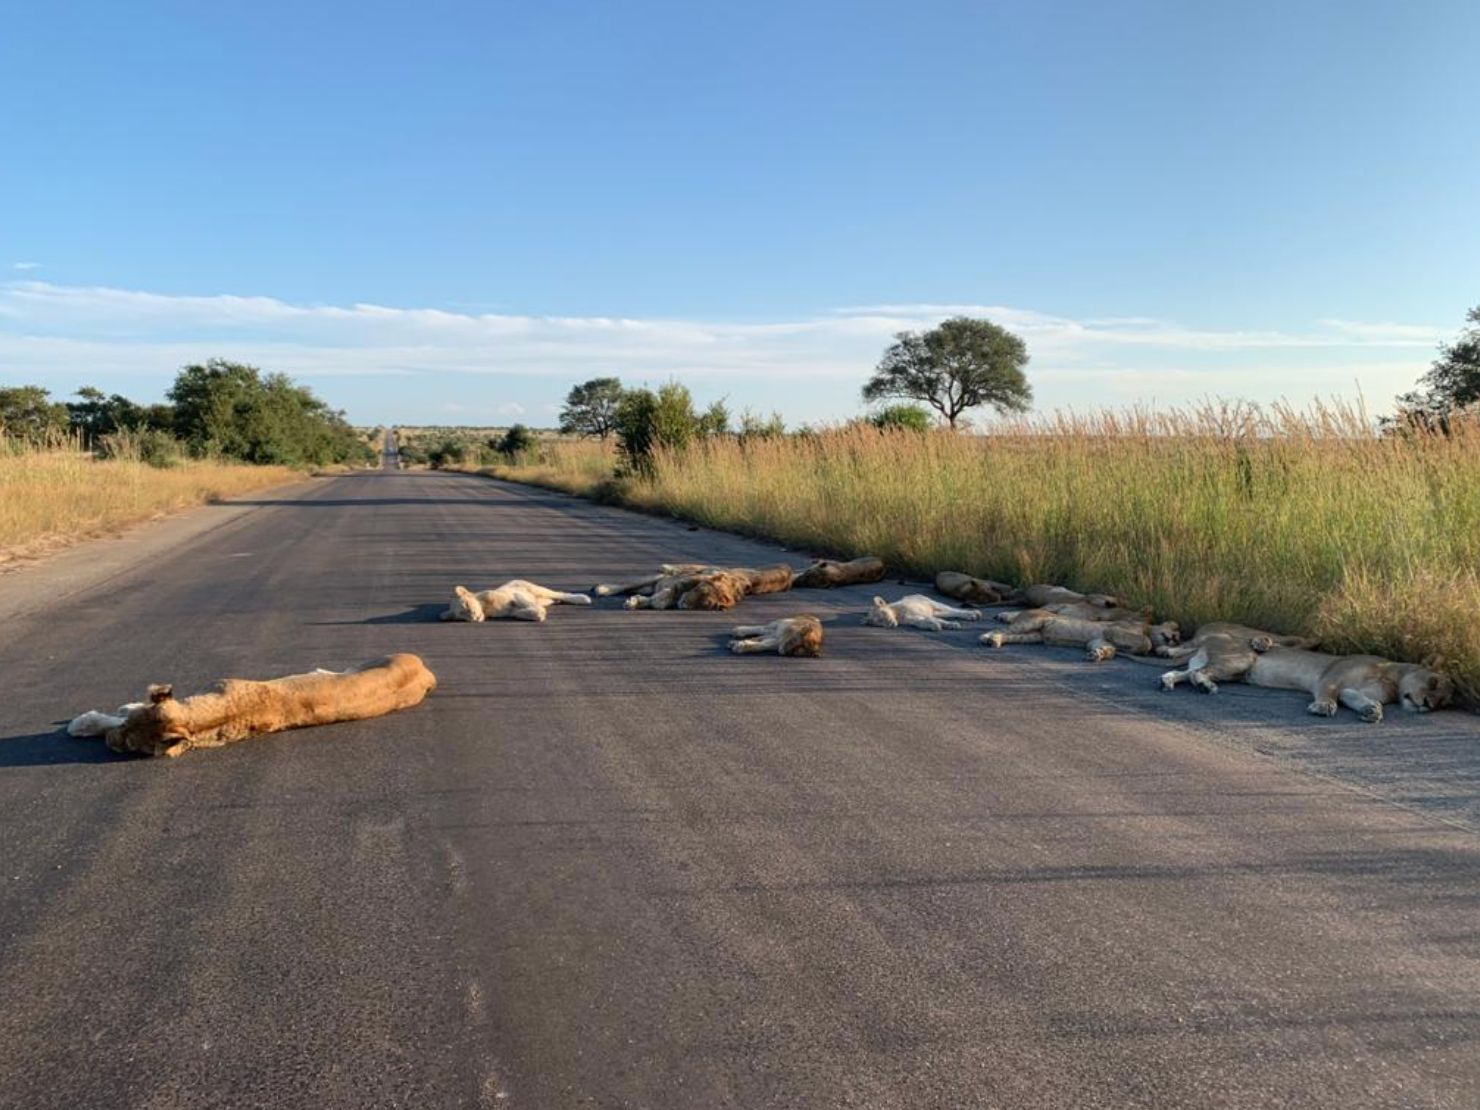 Kruger National Park has been shut since 25 March